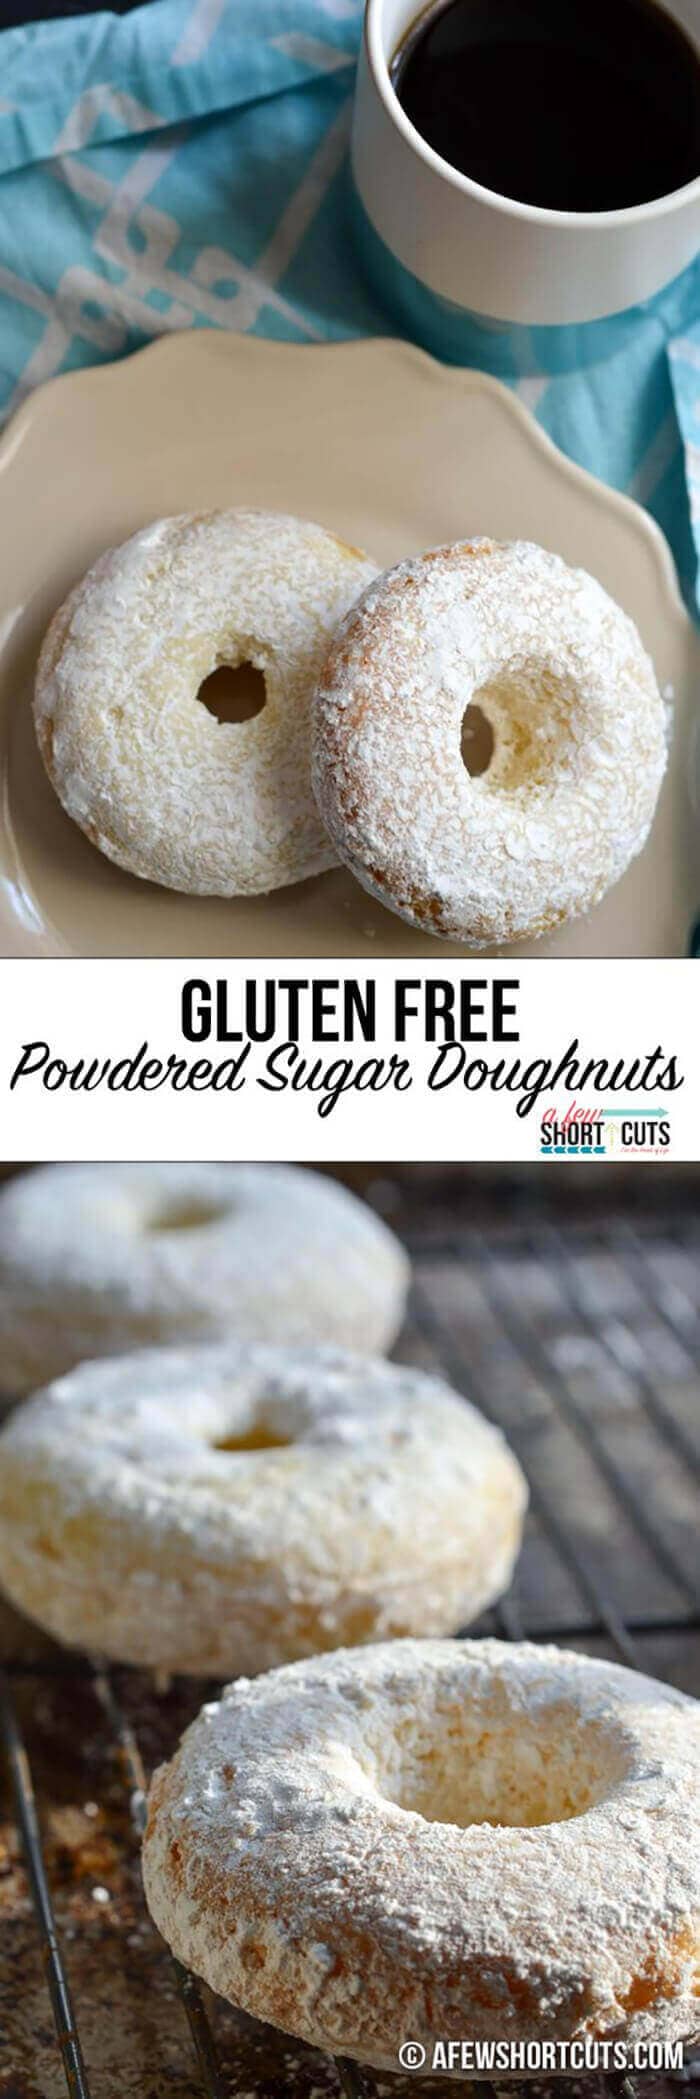 Gluten-free Powdered Sugar Doughnuts